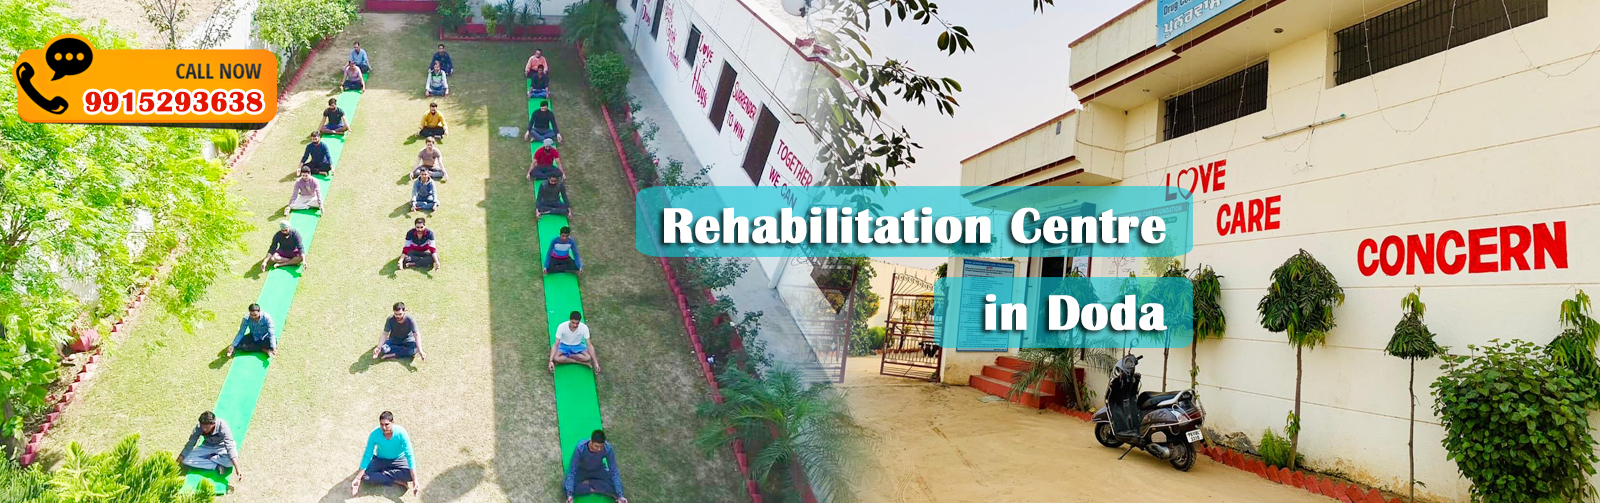 Rehabilitation Centre in Doda